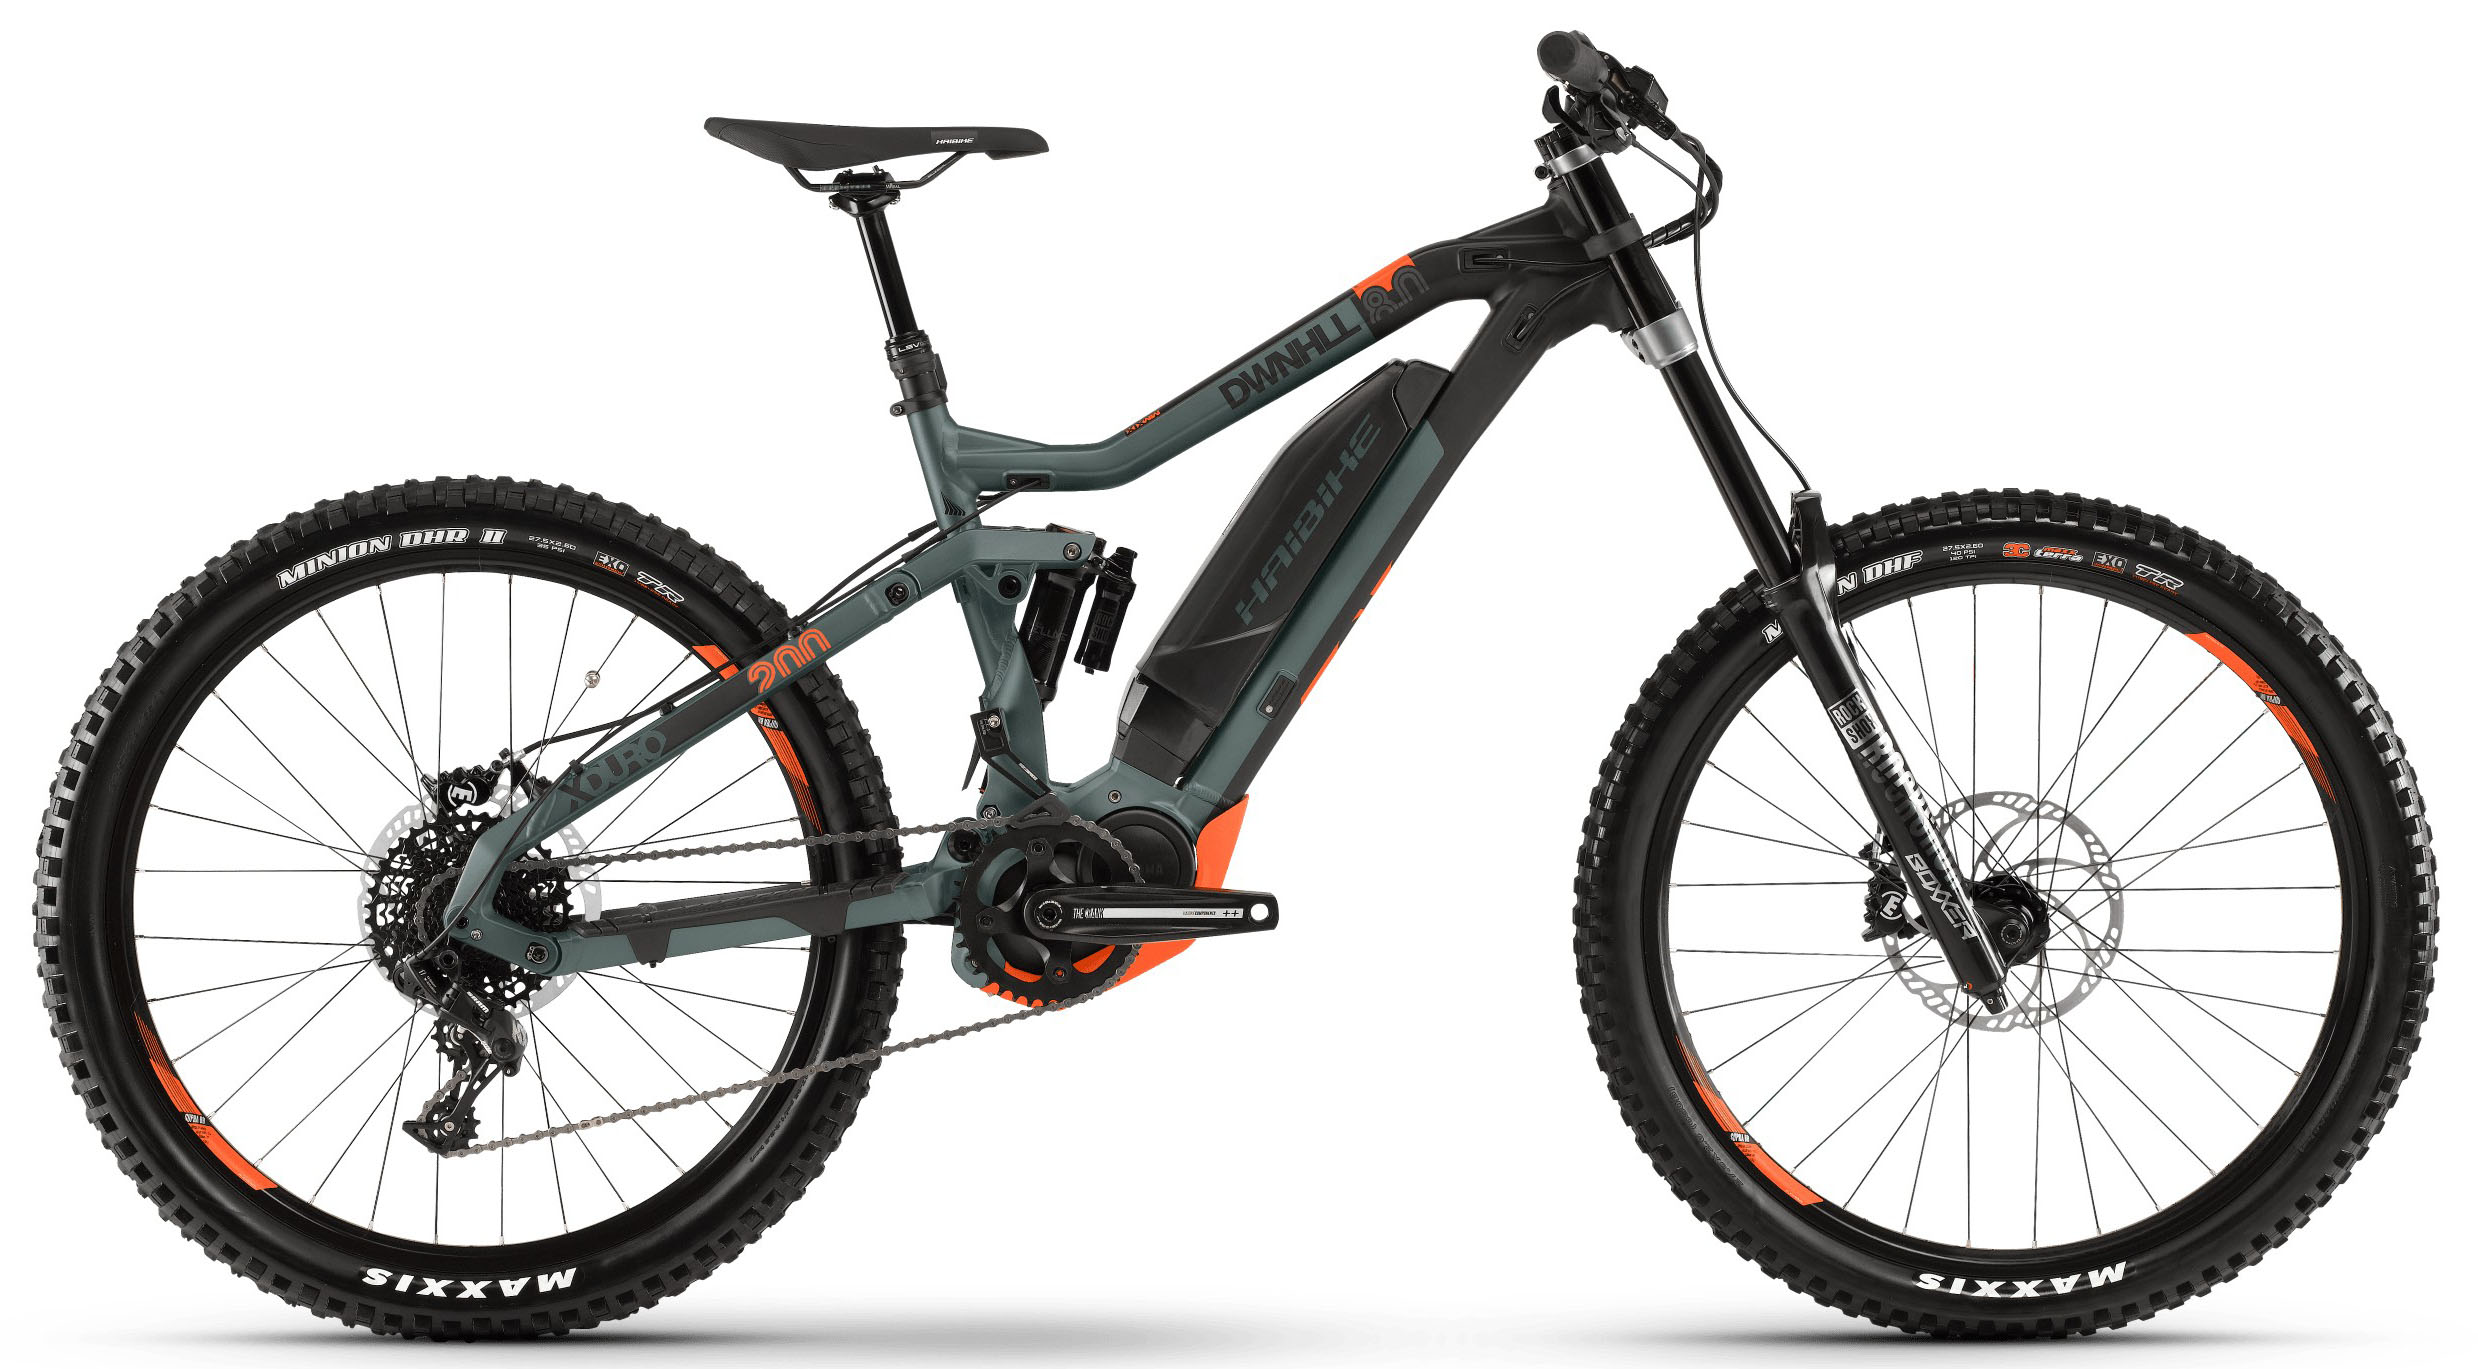  Отзывы о Электровелосипеде Haibike XDURO Dwnhll 8.0 500Wh 11-G NX 2019